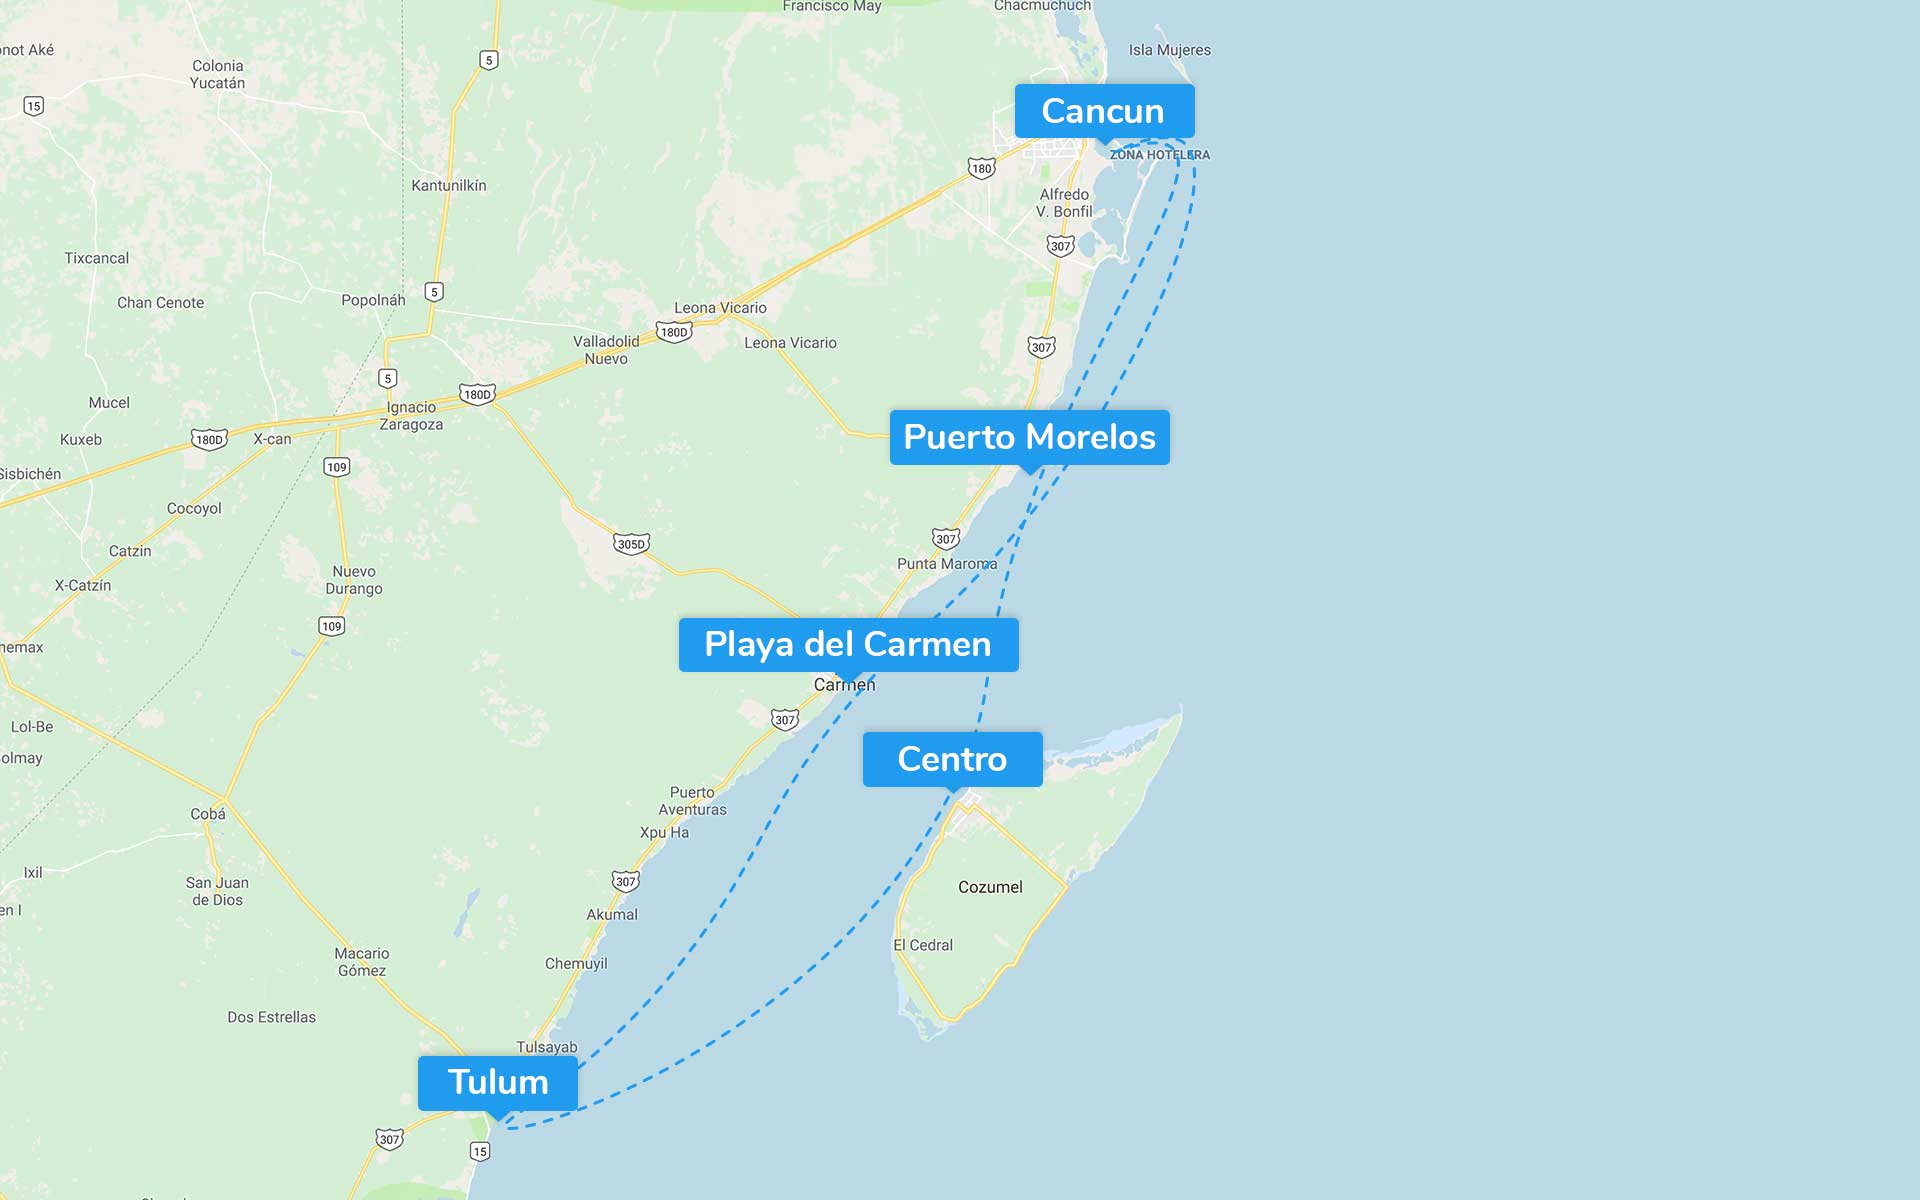 Cancun - Tulum (4days) itinerary